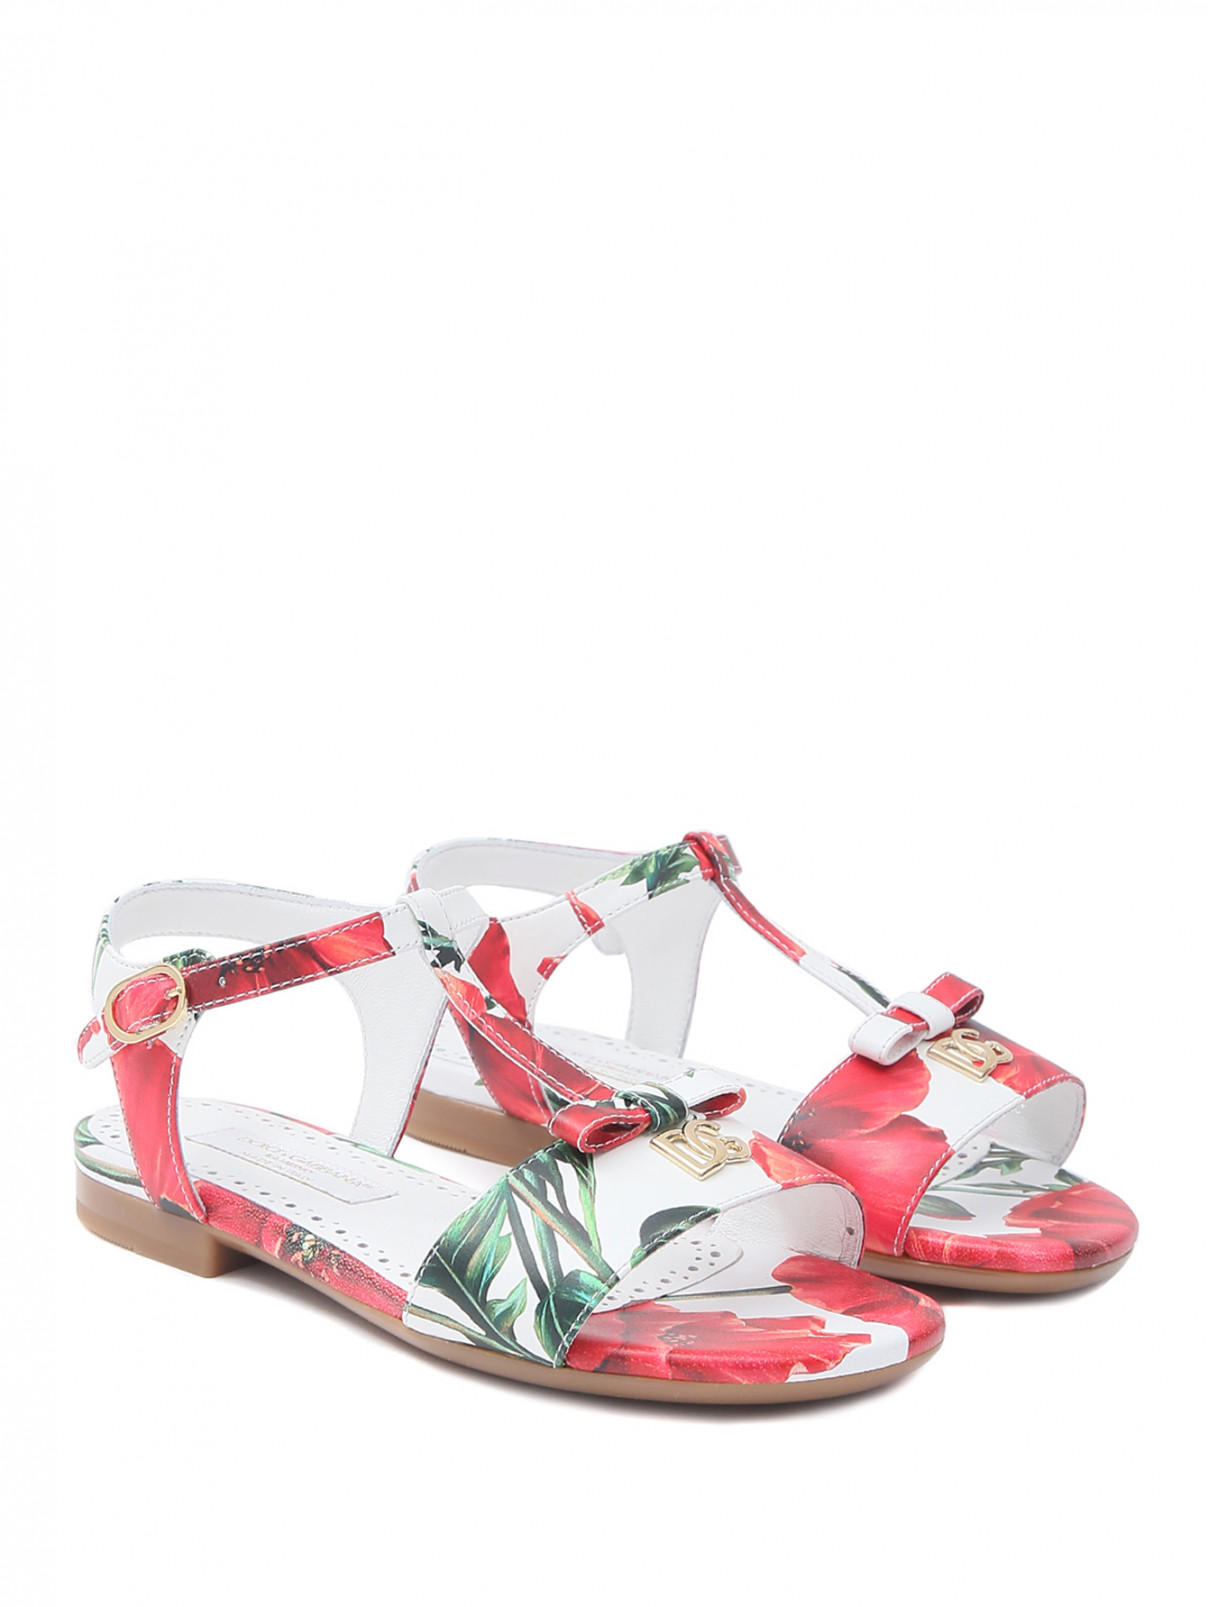 Сандалии с цветочным узором Dolce & Gabbana  –  Общий вид  – Цвет:  Узор